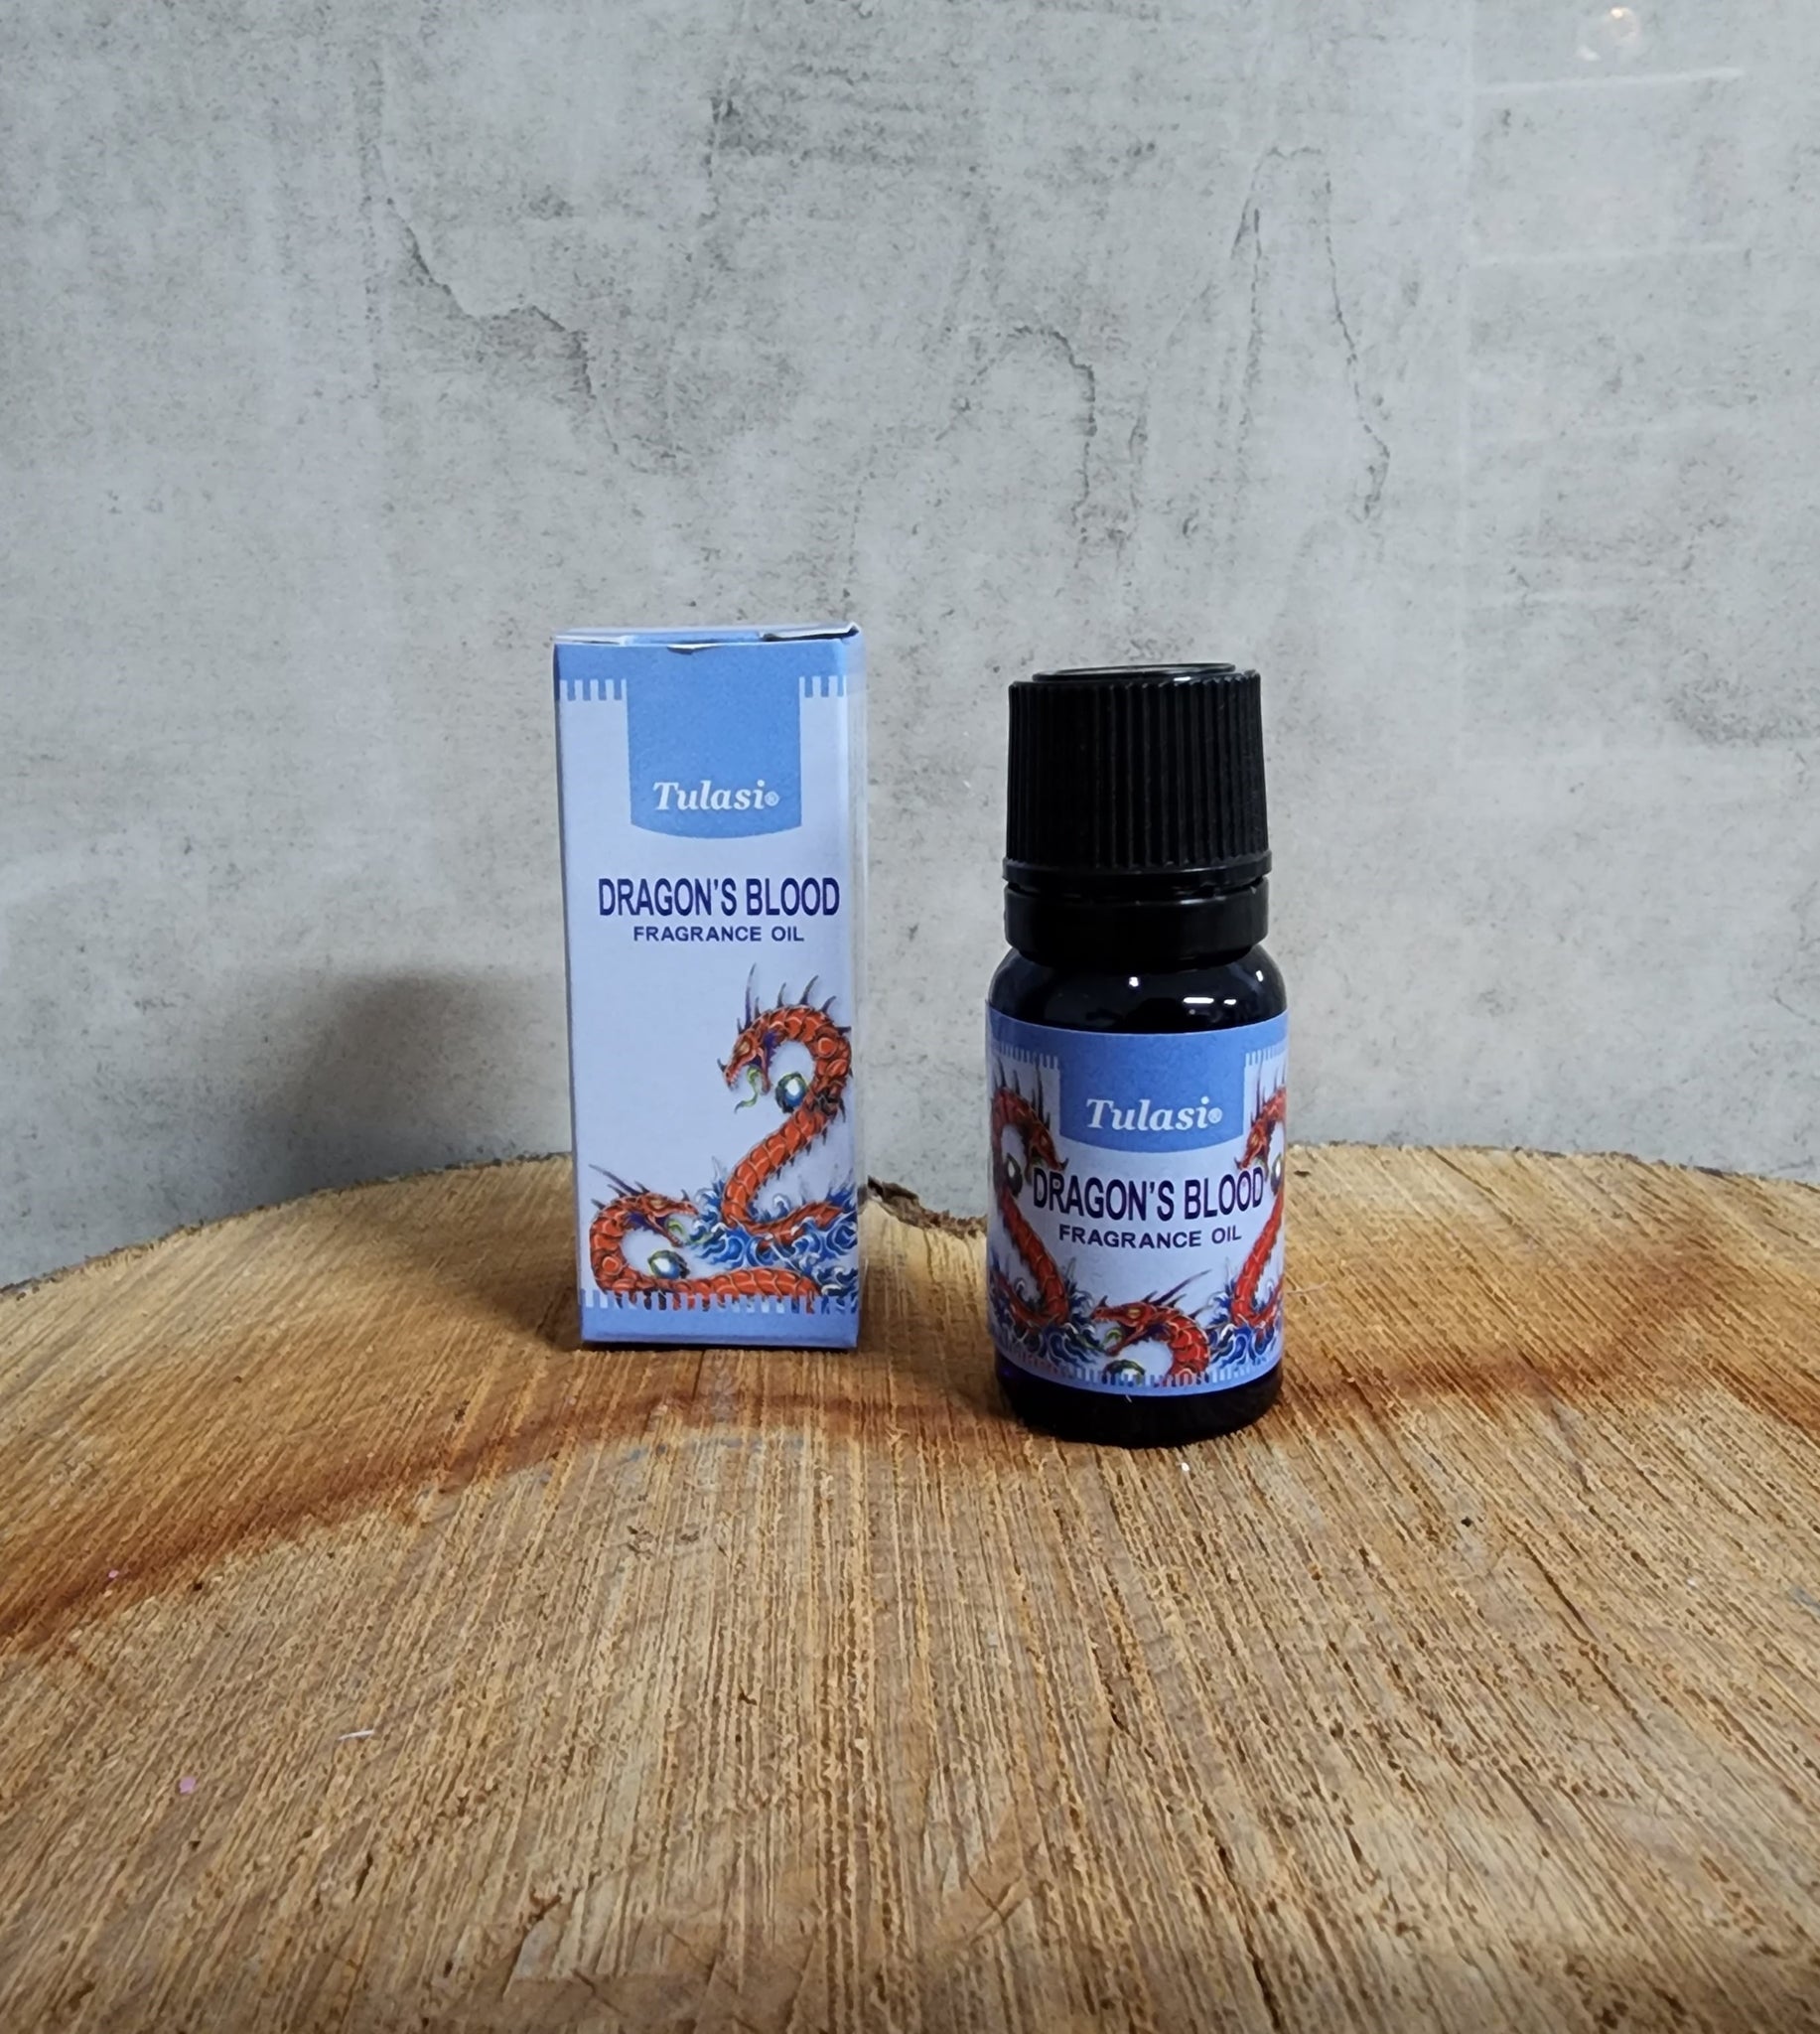 Tulasi Dragon's Blood Fragrance Oil